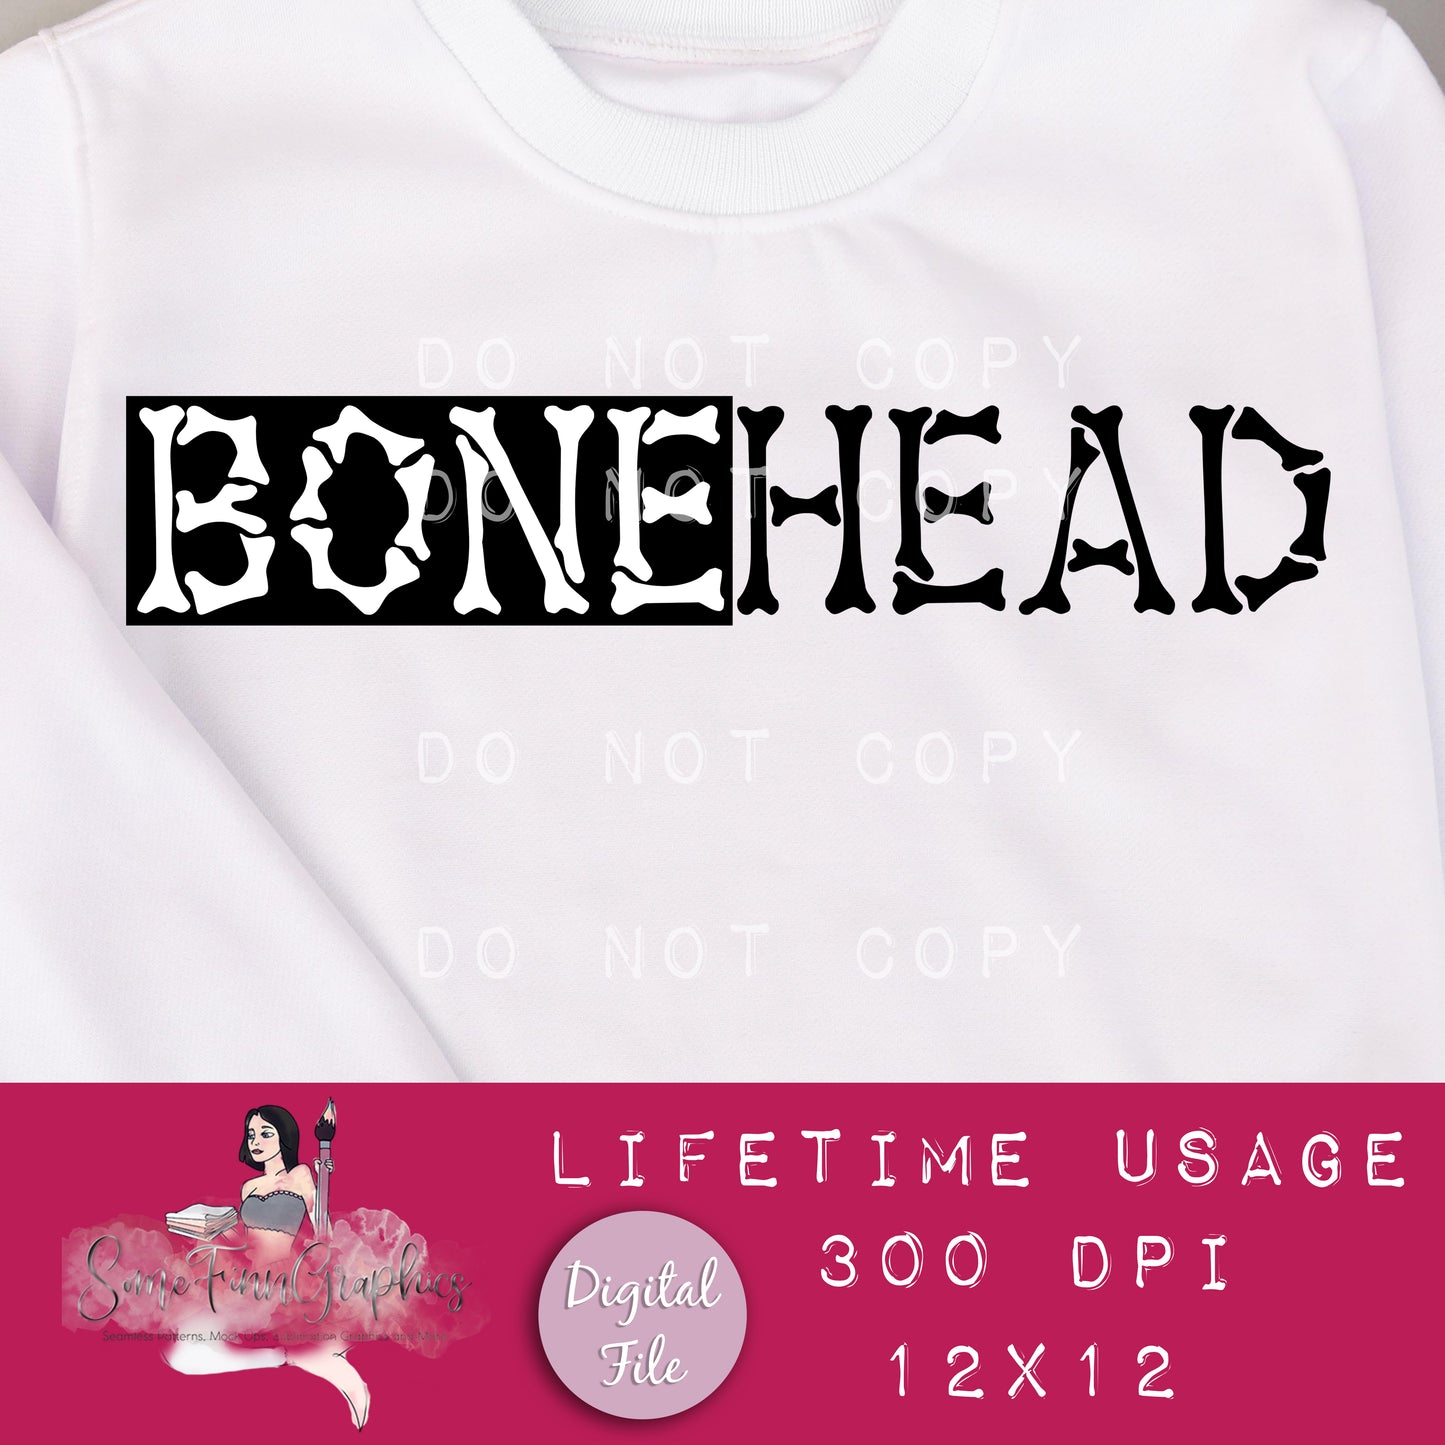 Bonehead Sub Clip Art